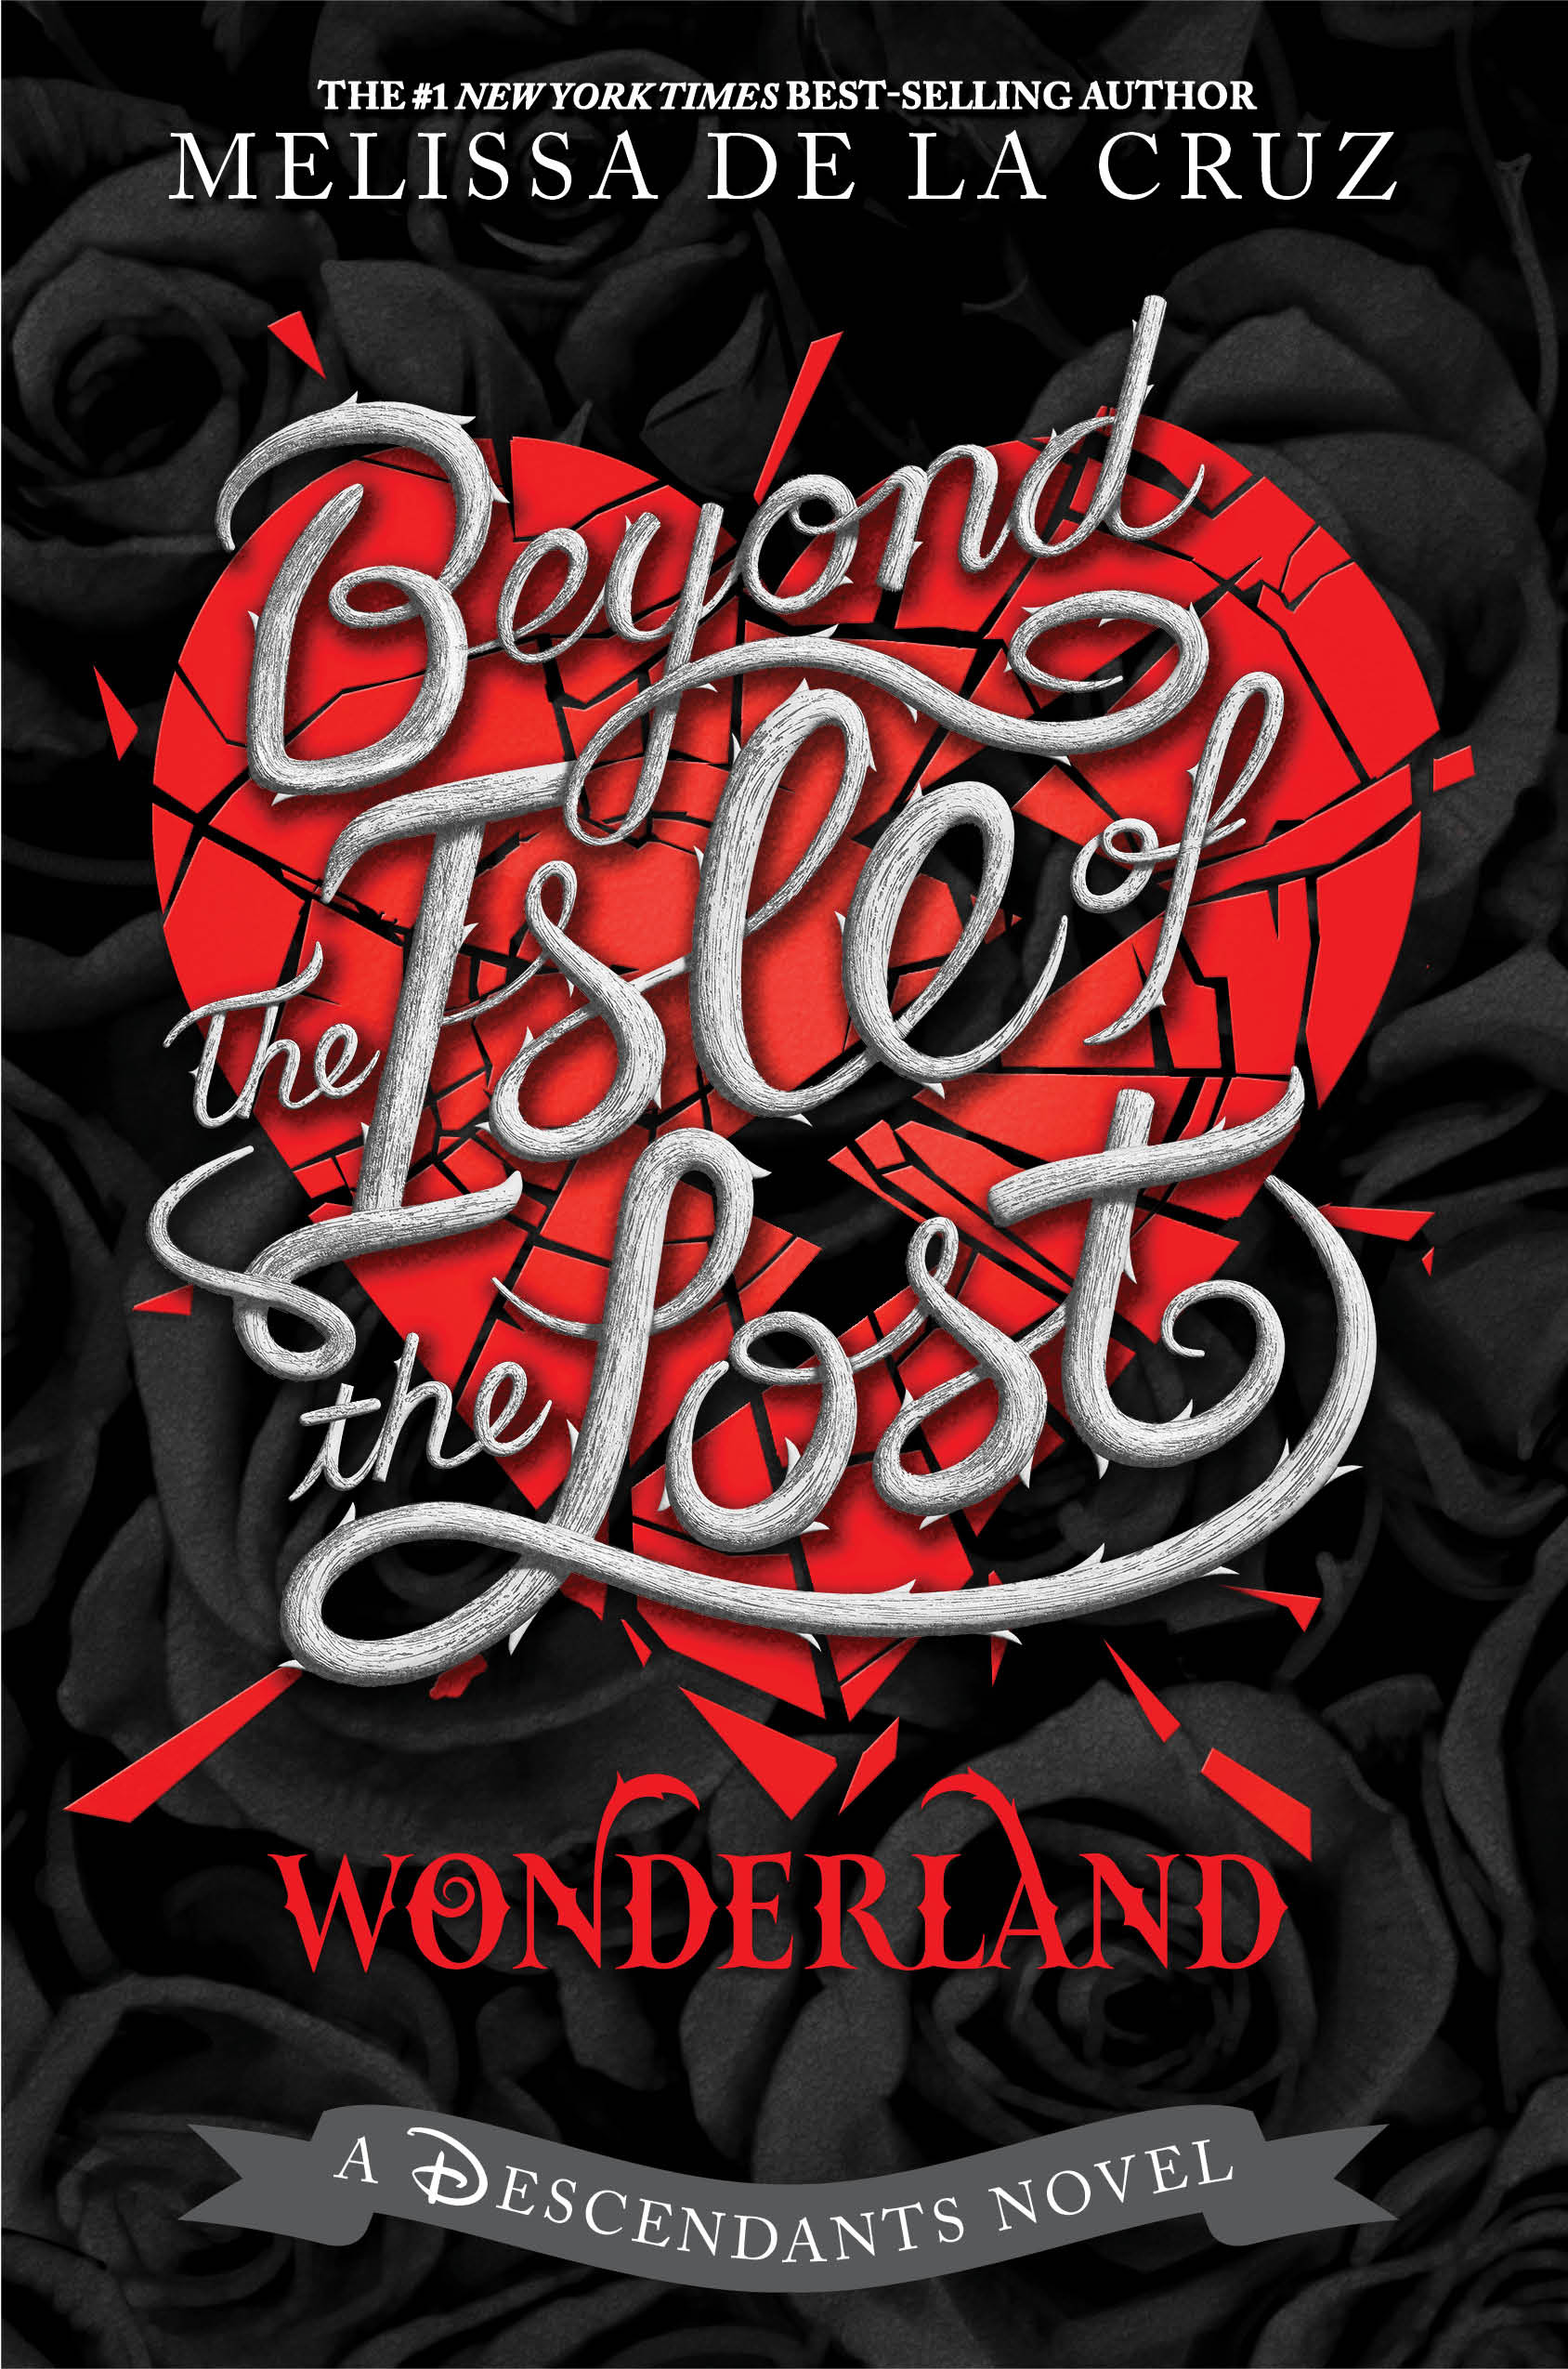 Beyond the Isle of the Lost by Melissa de la Cruz - Alice in